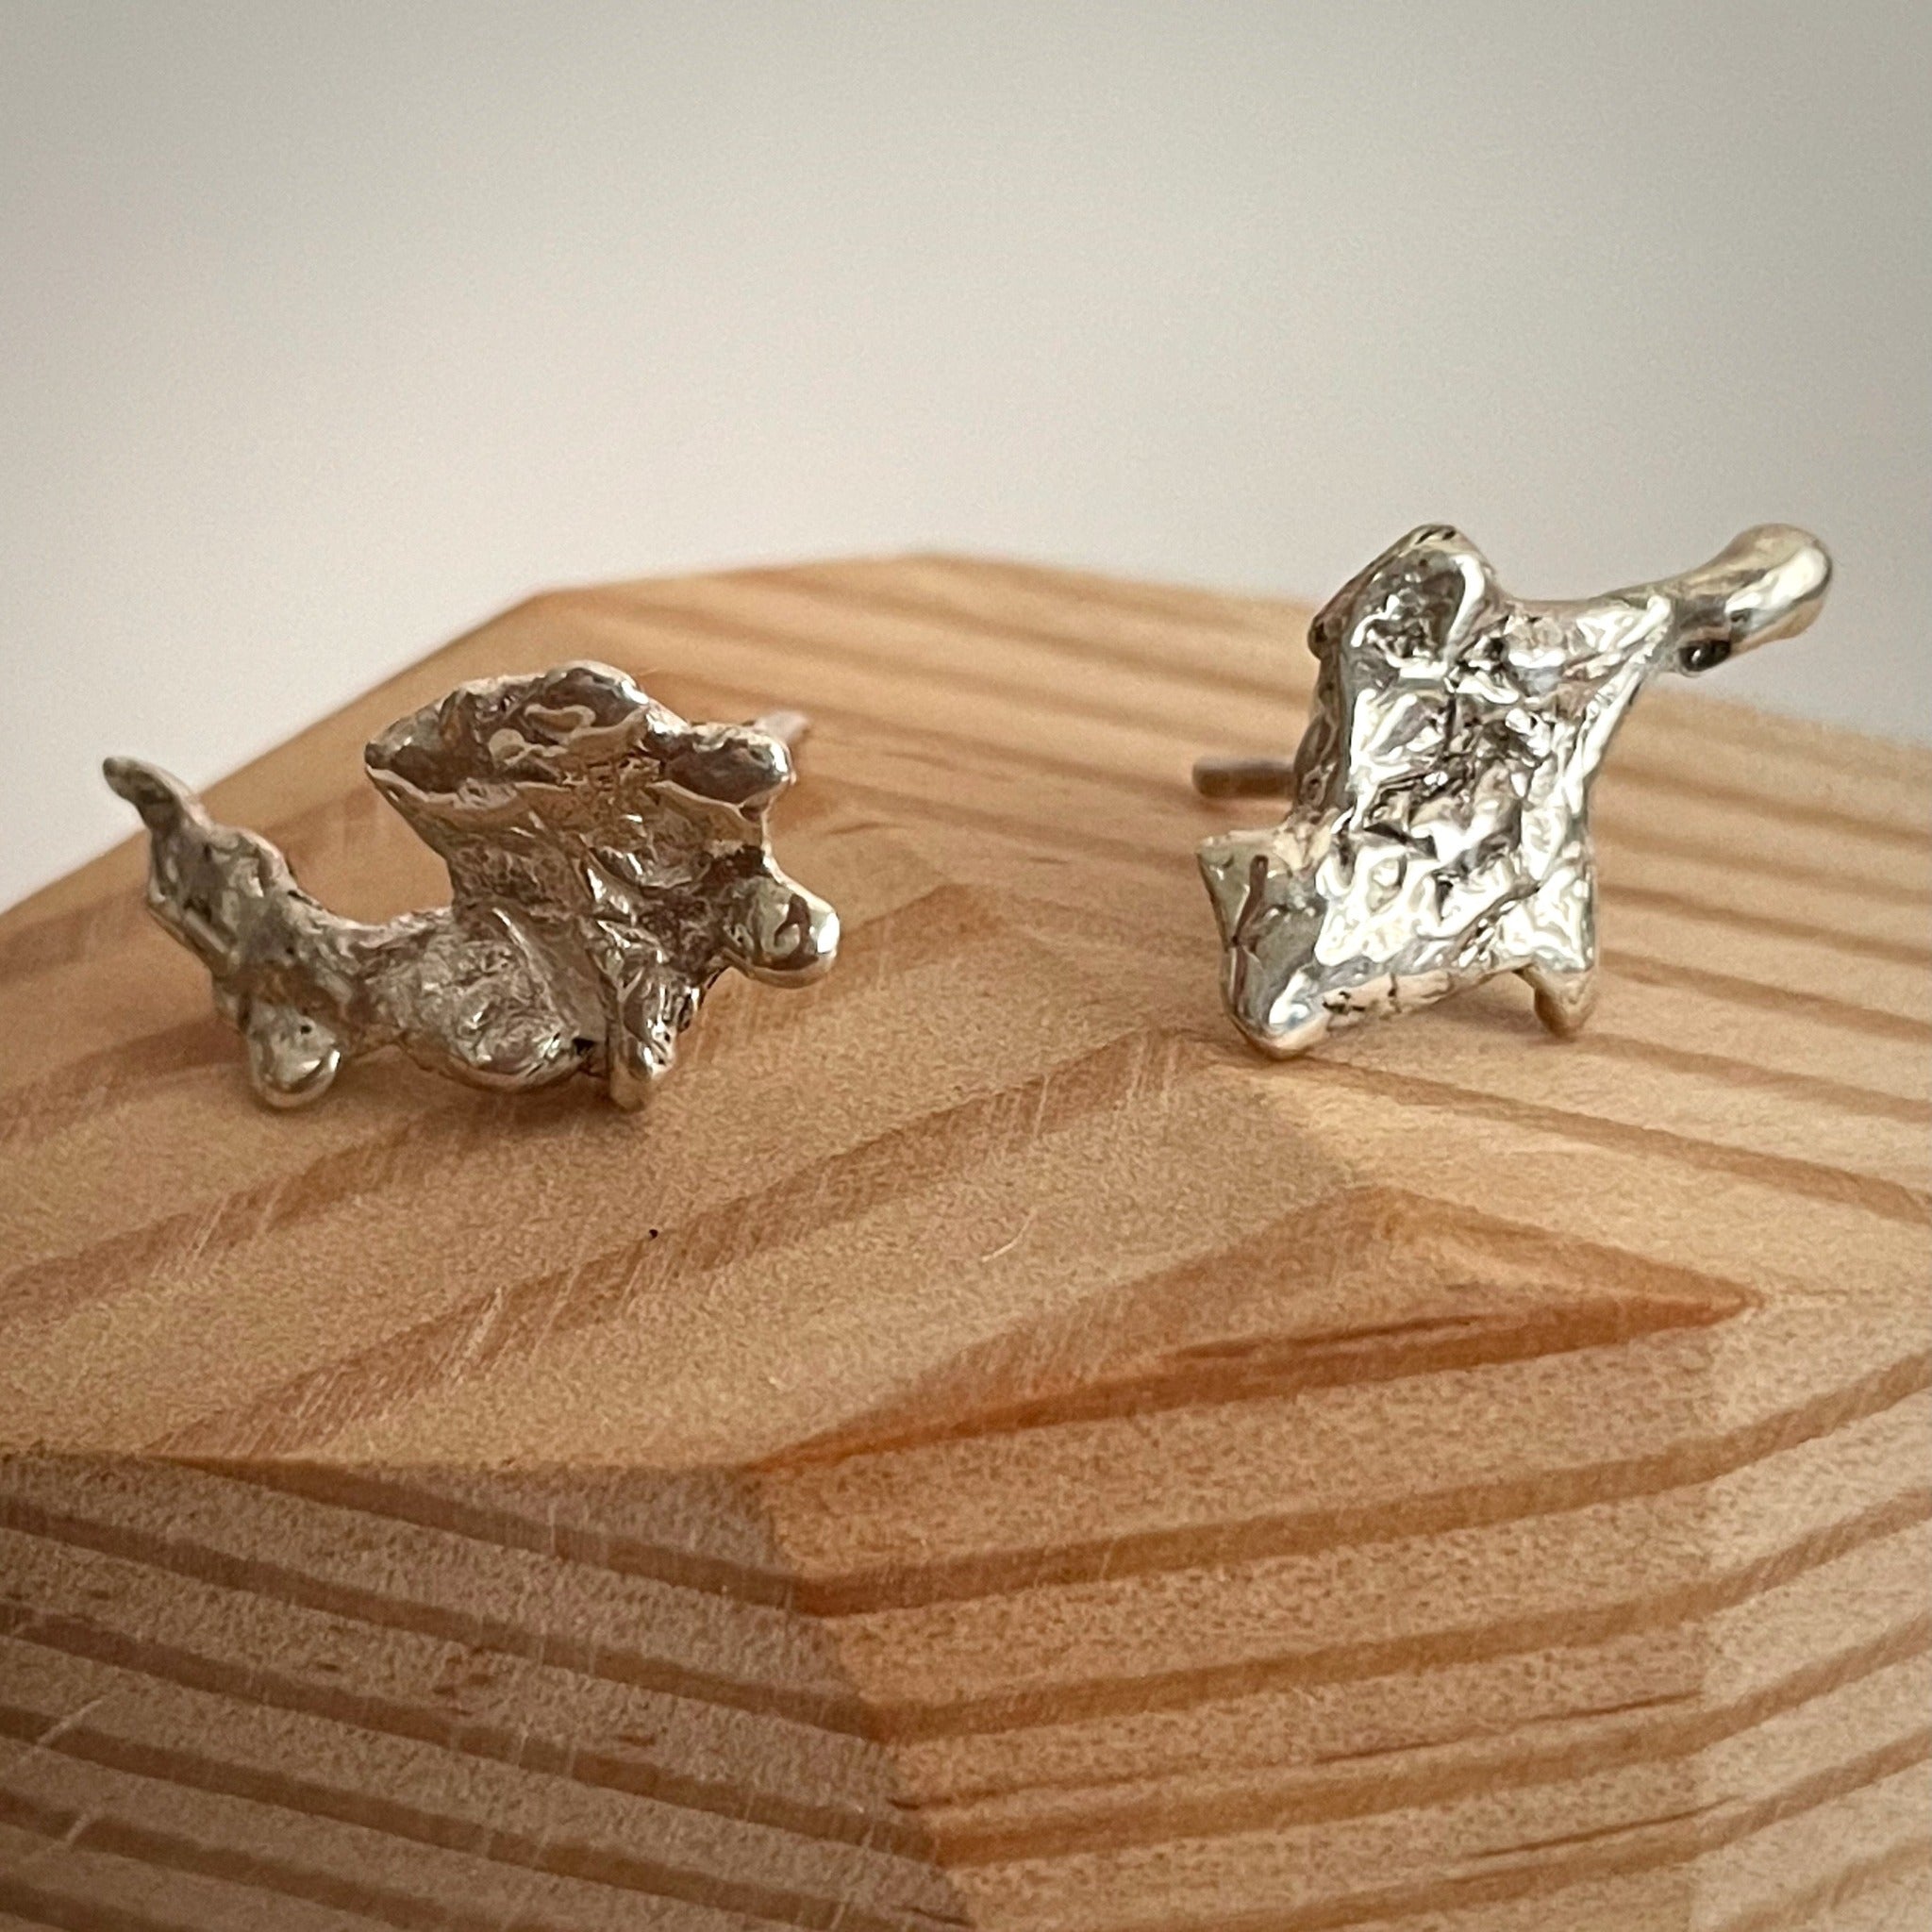 Small water cast stirling silver stud earrings handmade by Pam de Groot